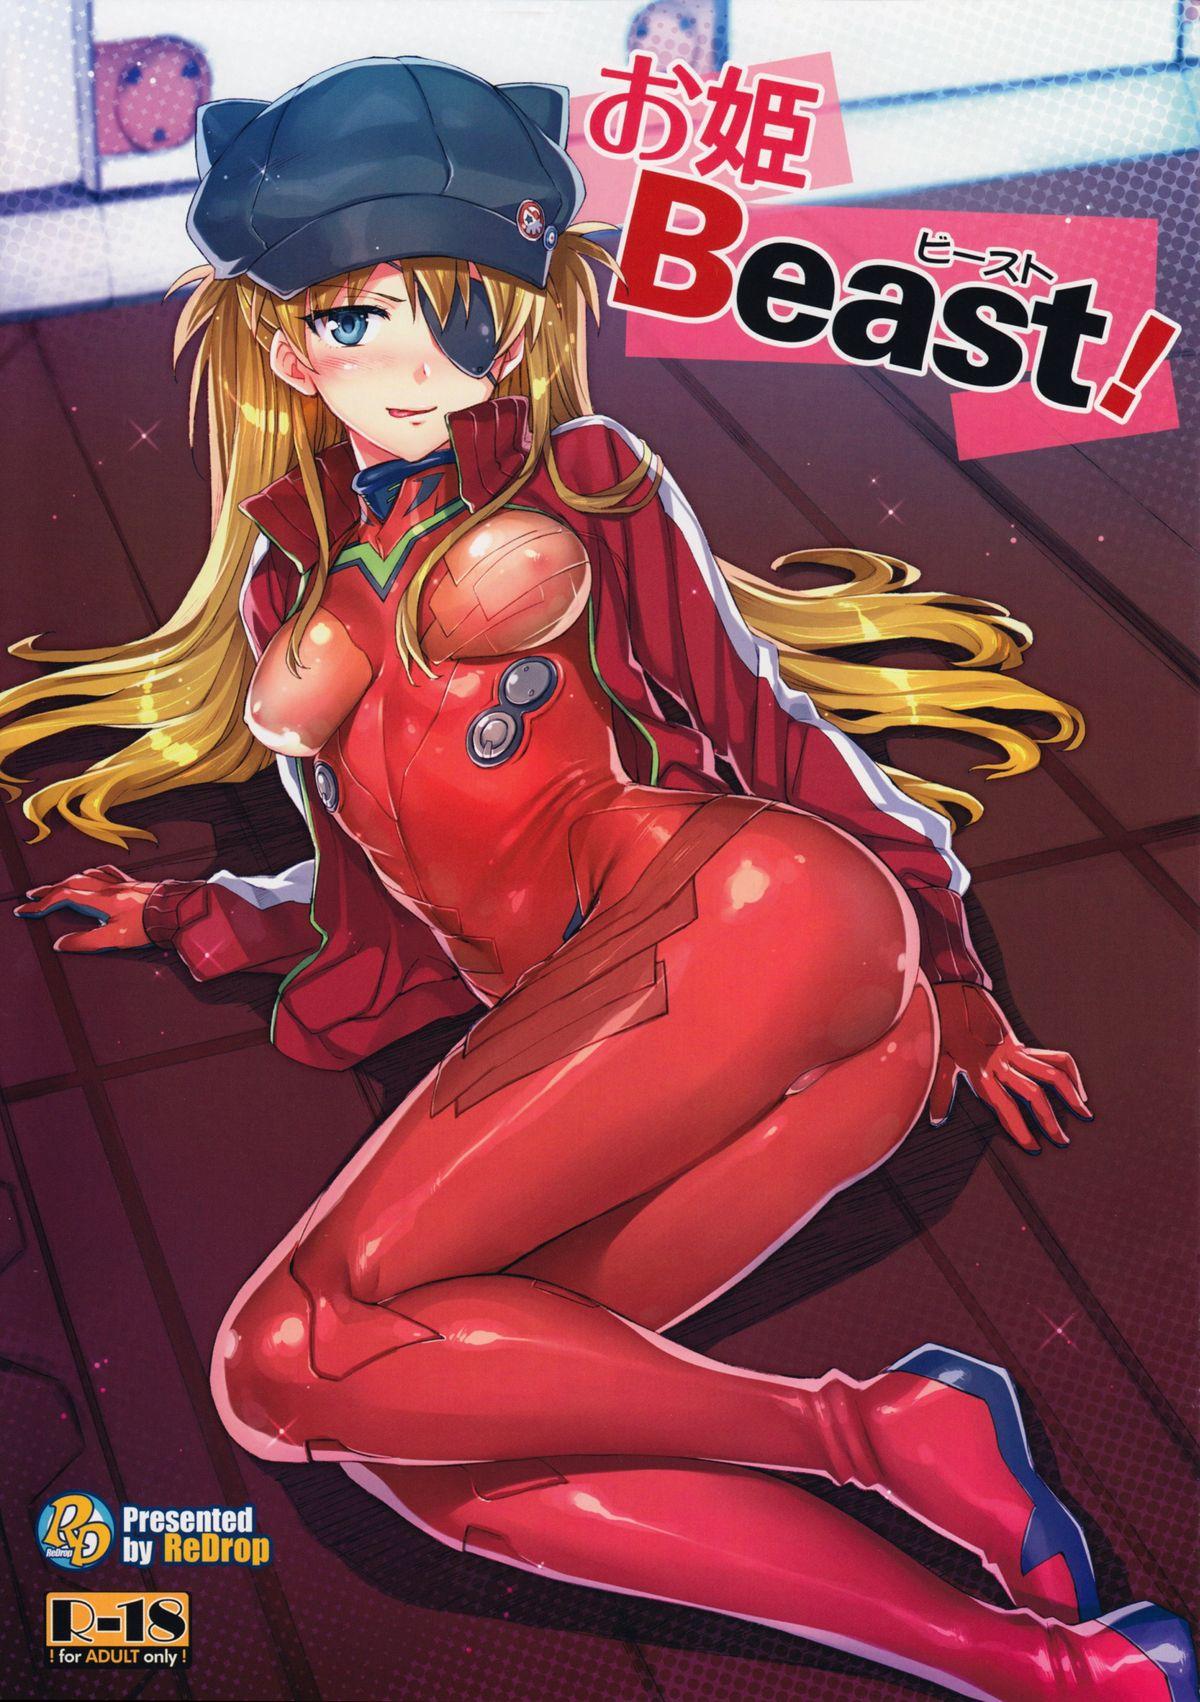 Spreading Ohime Beast! - Neon genesis evangelion T Girl - Picture 1